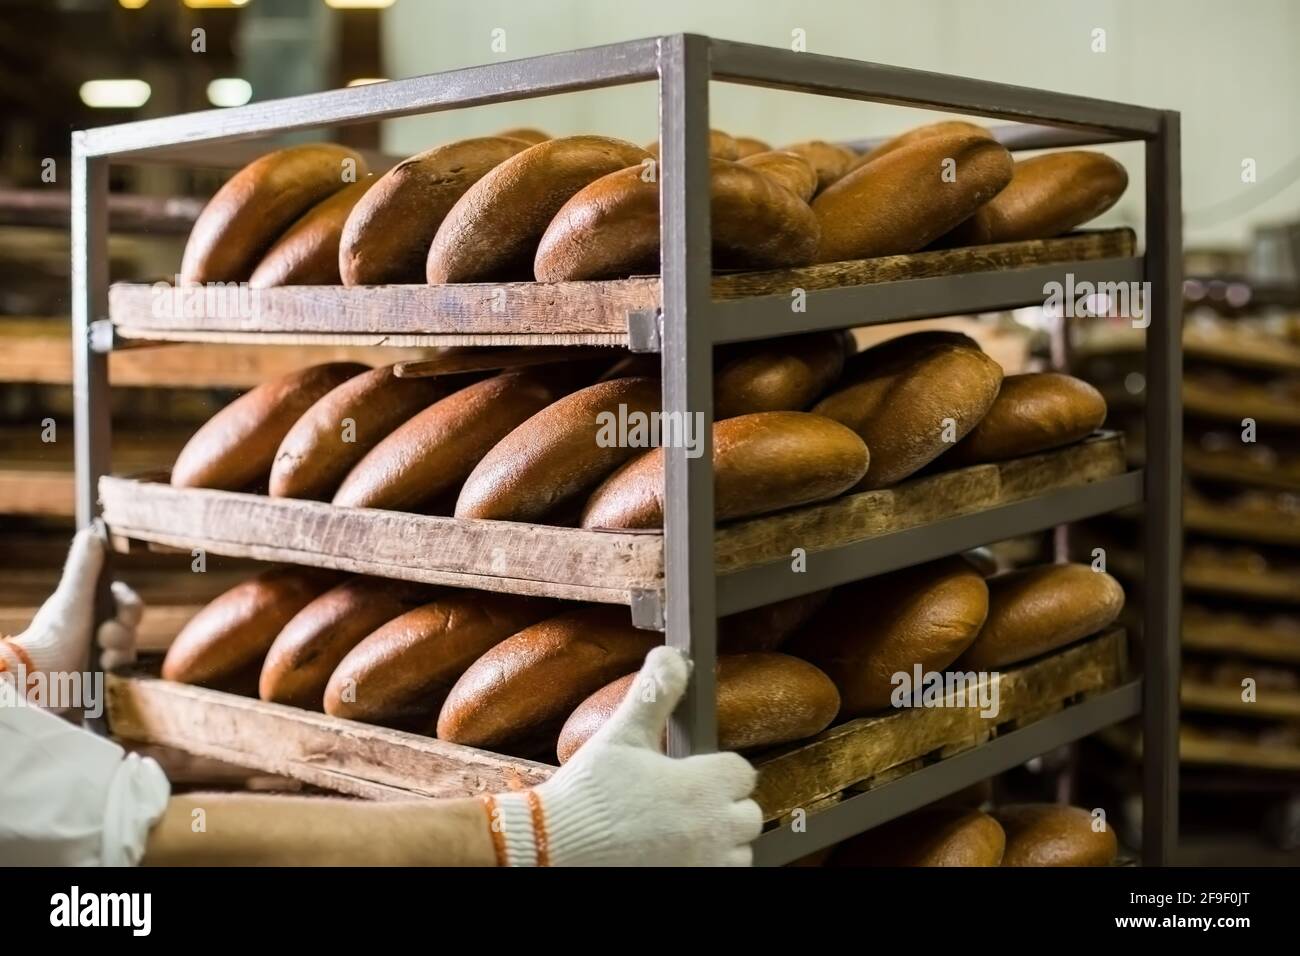 INDUSTRIAL BAKERY EQUIPMENT - Bread Racks